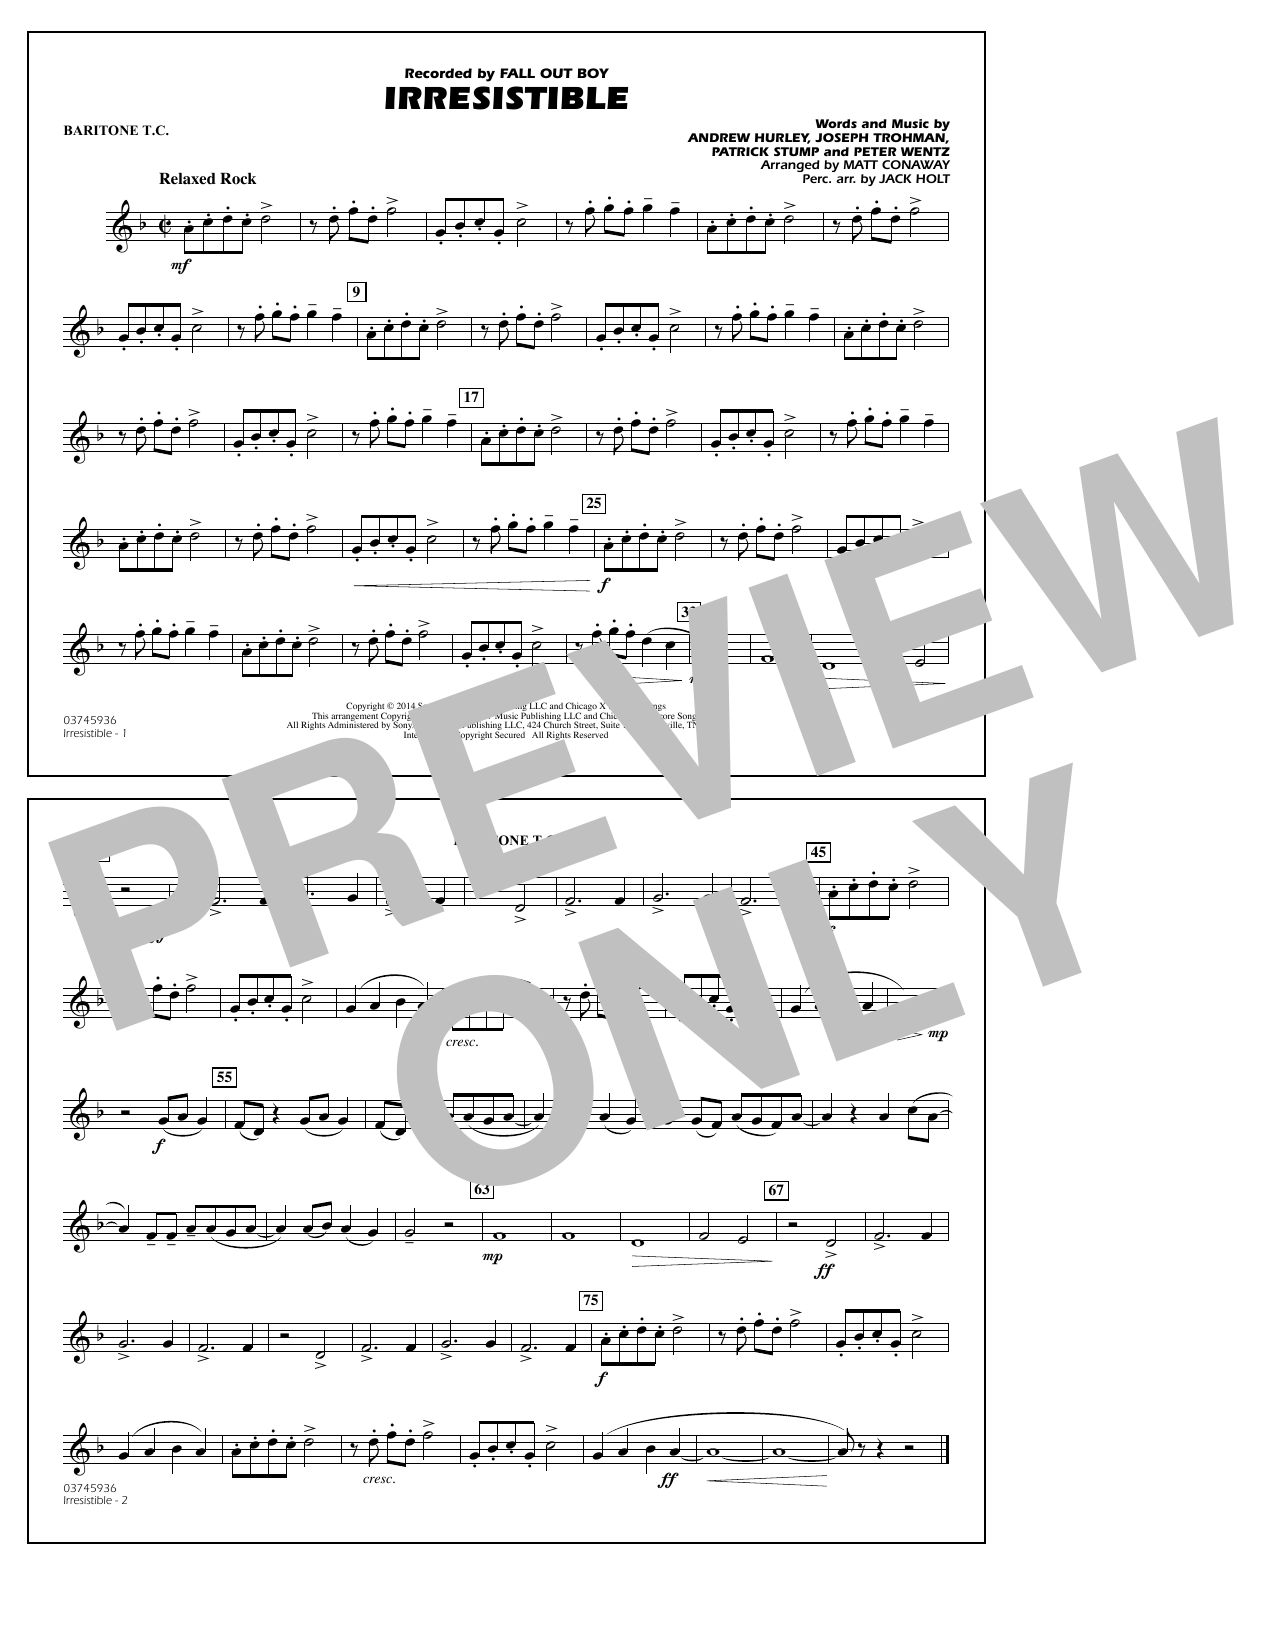 Matt Conaway Irresistible - Baritone T.C. Sheet Music Notes & Chords for Marching Band - Download or Print PDF